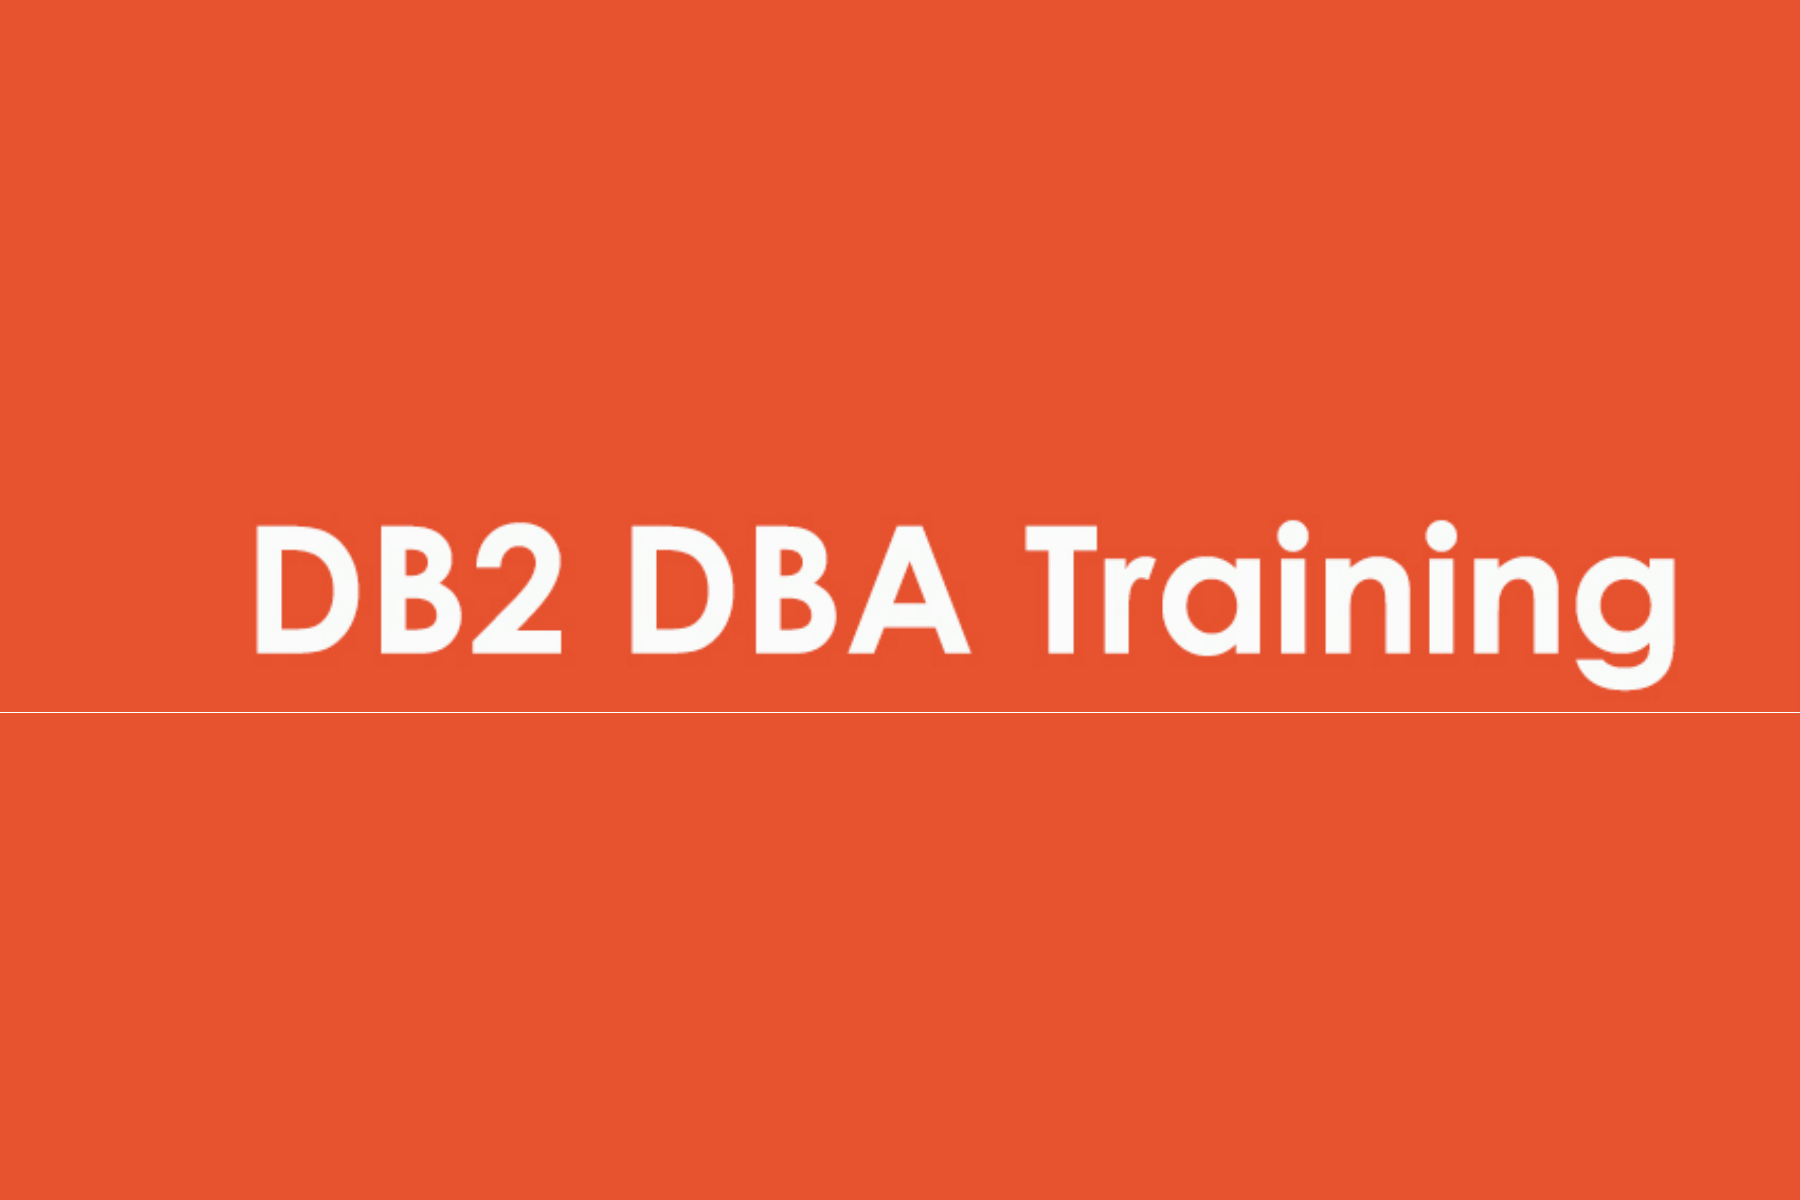 DB2 DBA training in chennai